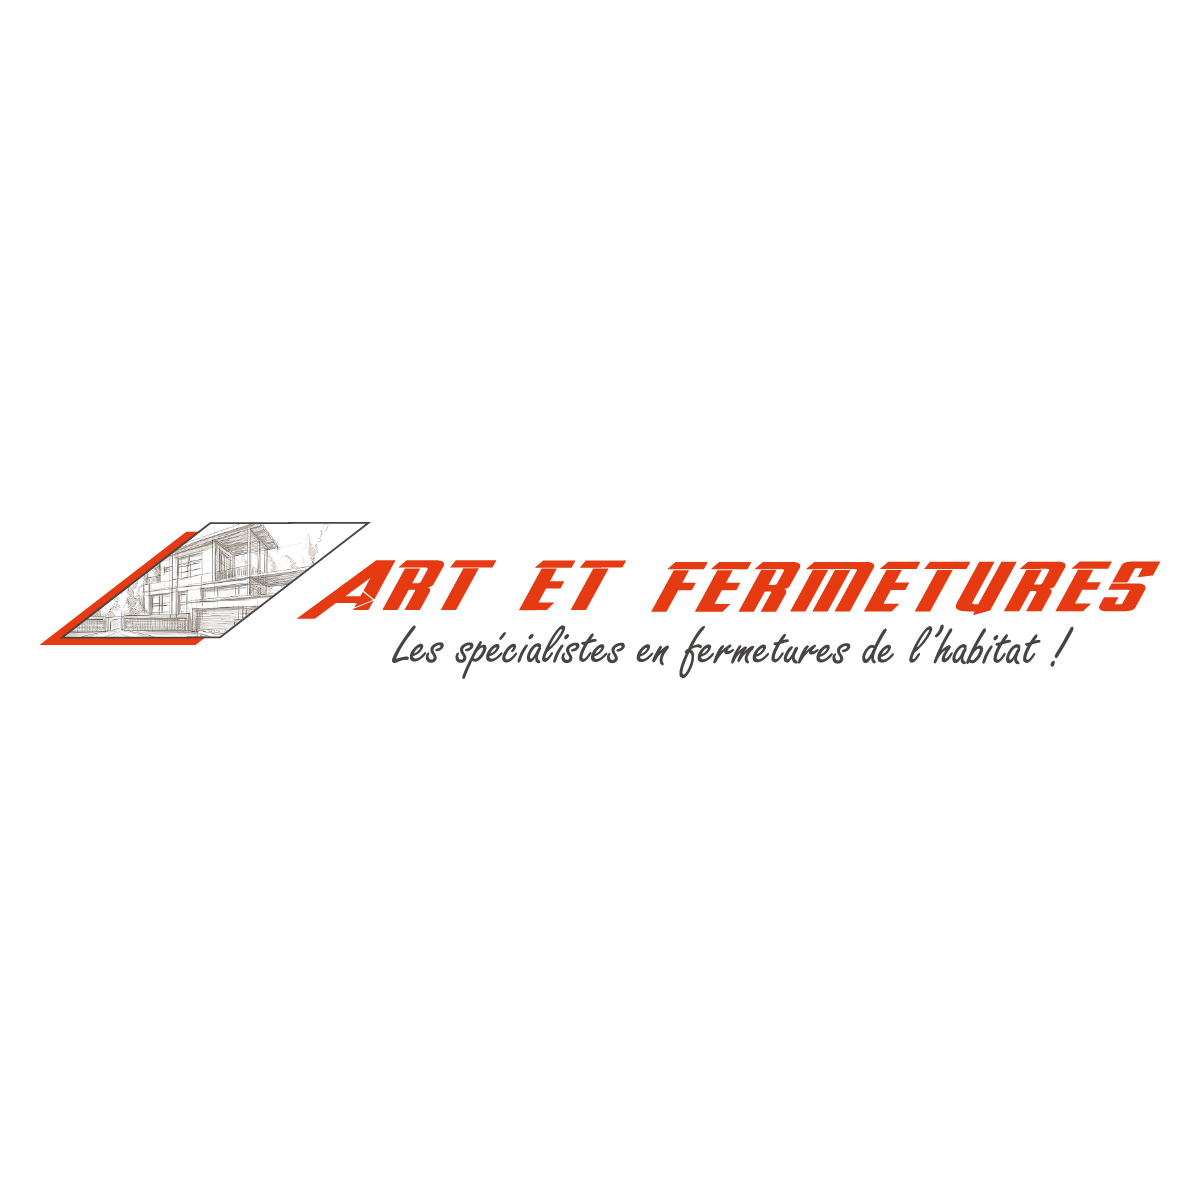 (c) Artetfermetures.fr